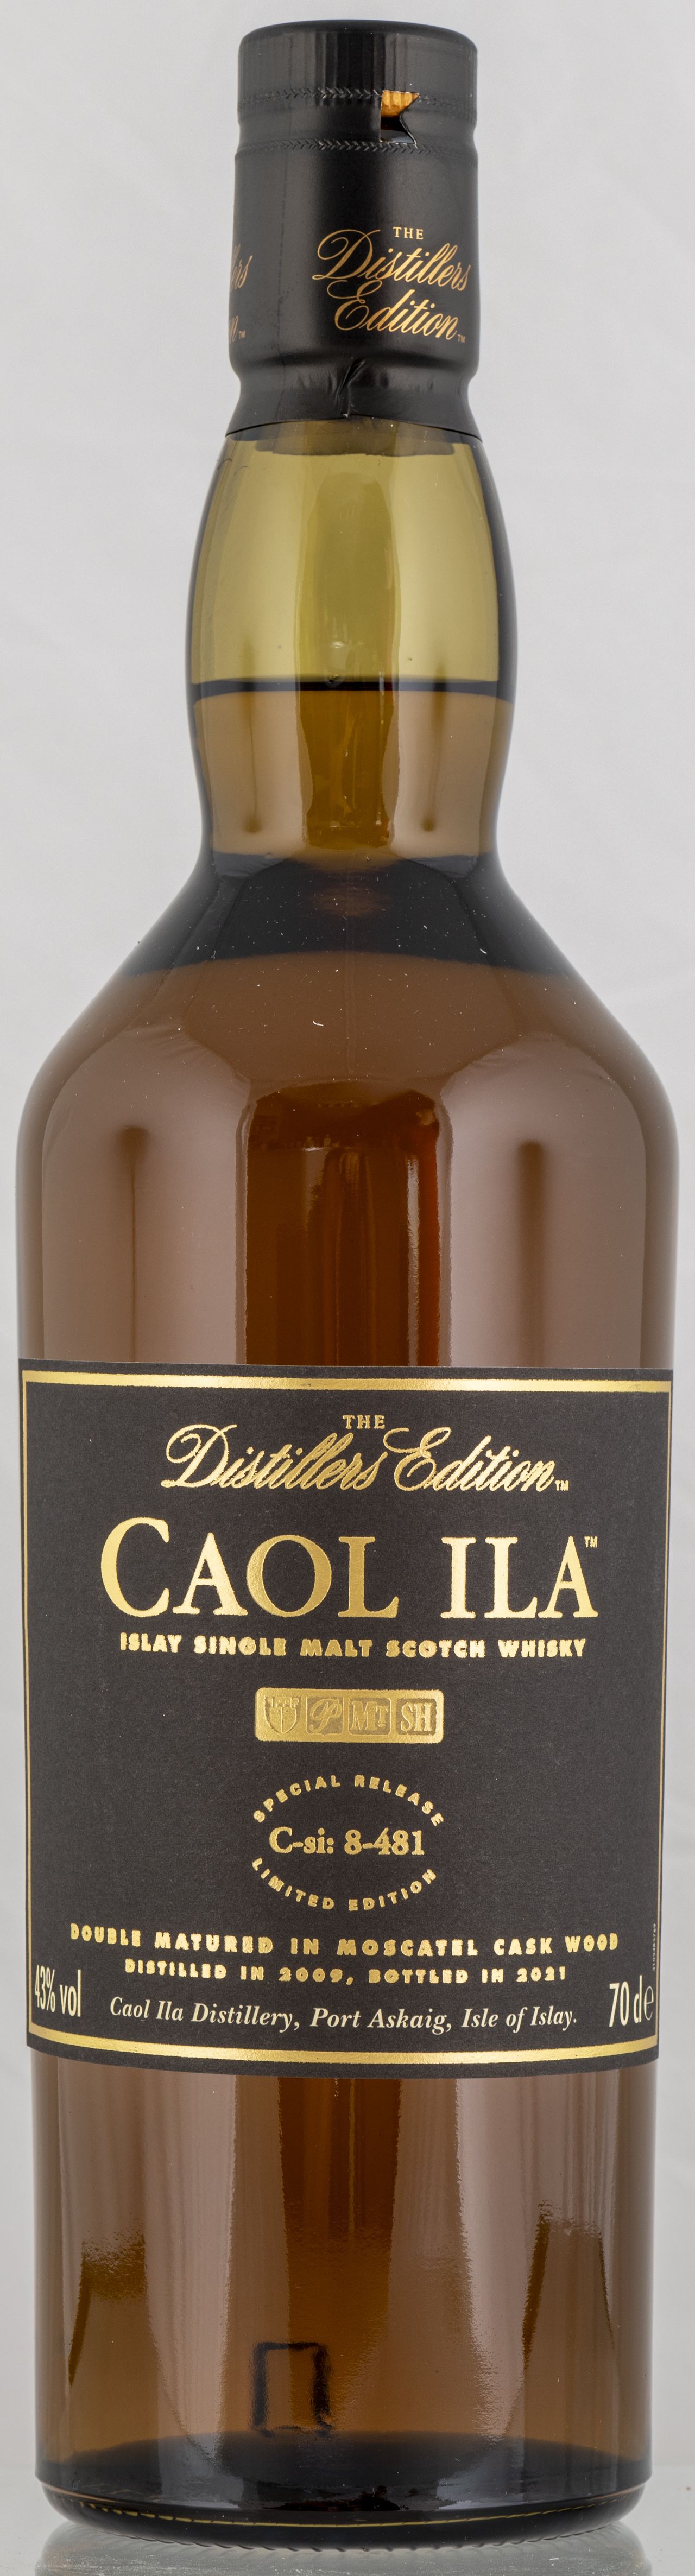 Billede: PHC_7302 - Caol Ila Distillers Edition 2009-2021 C-si 8-481 - bottle front.jpg